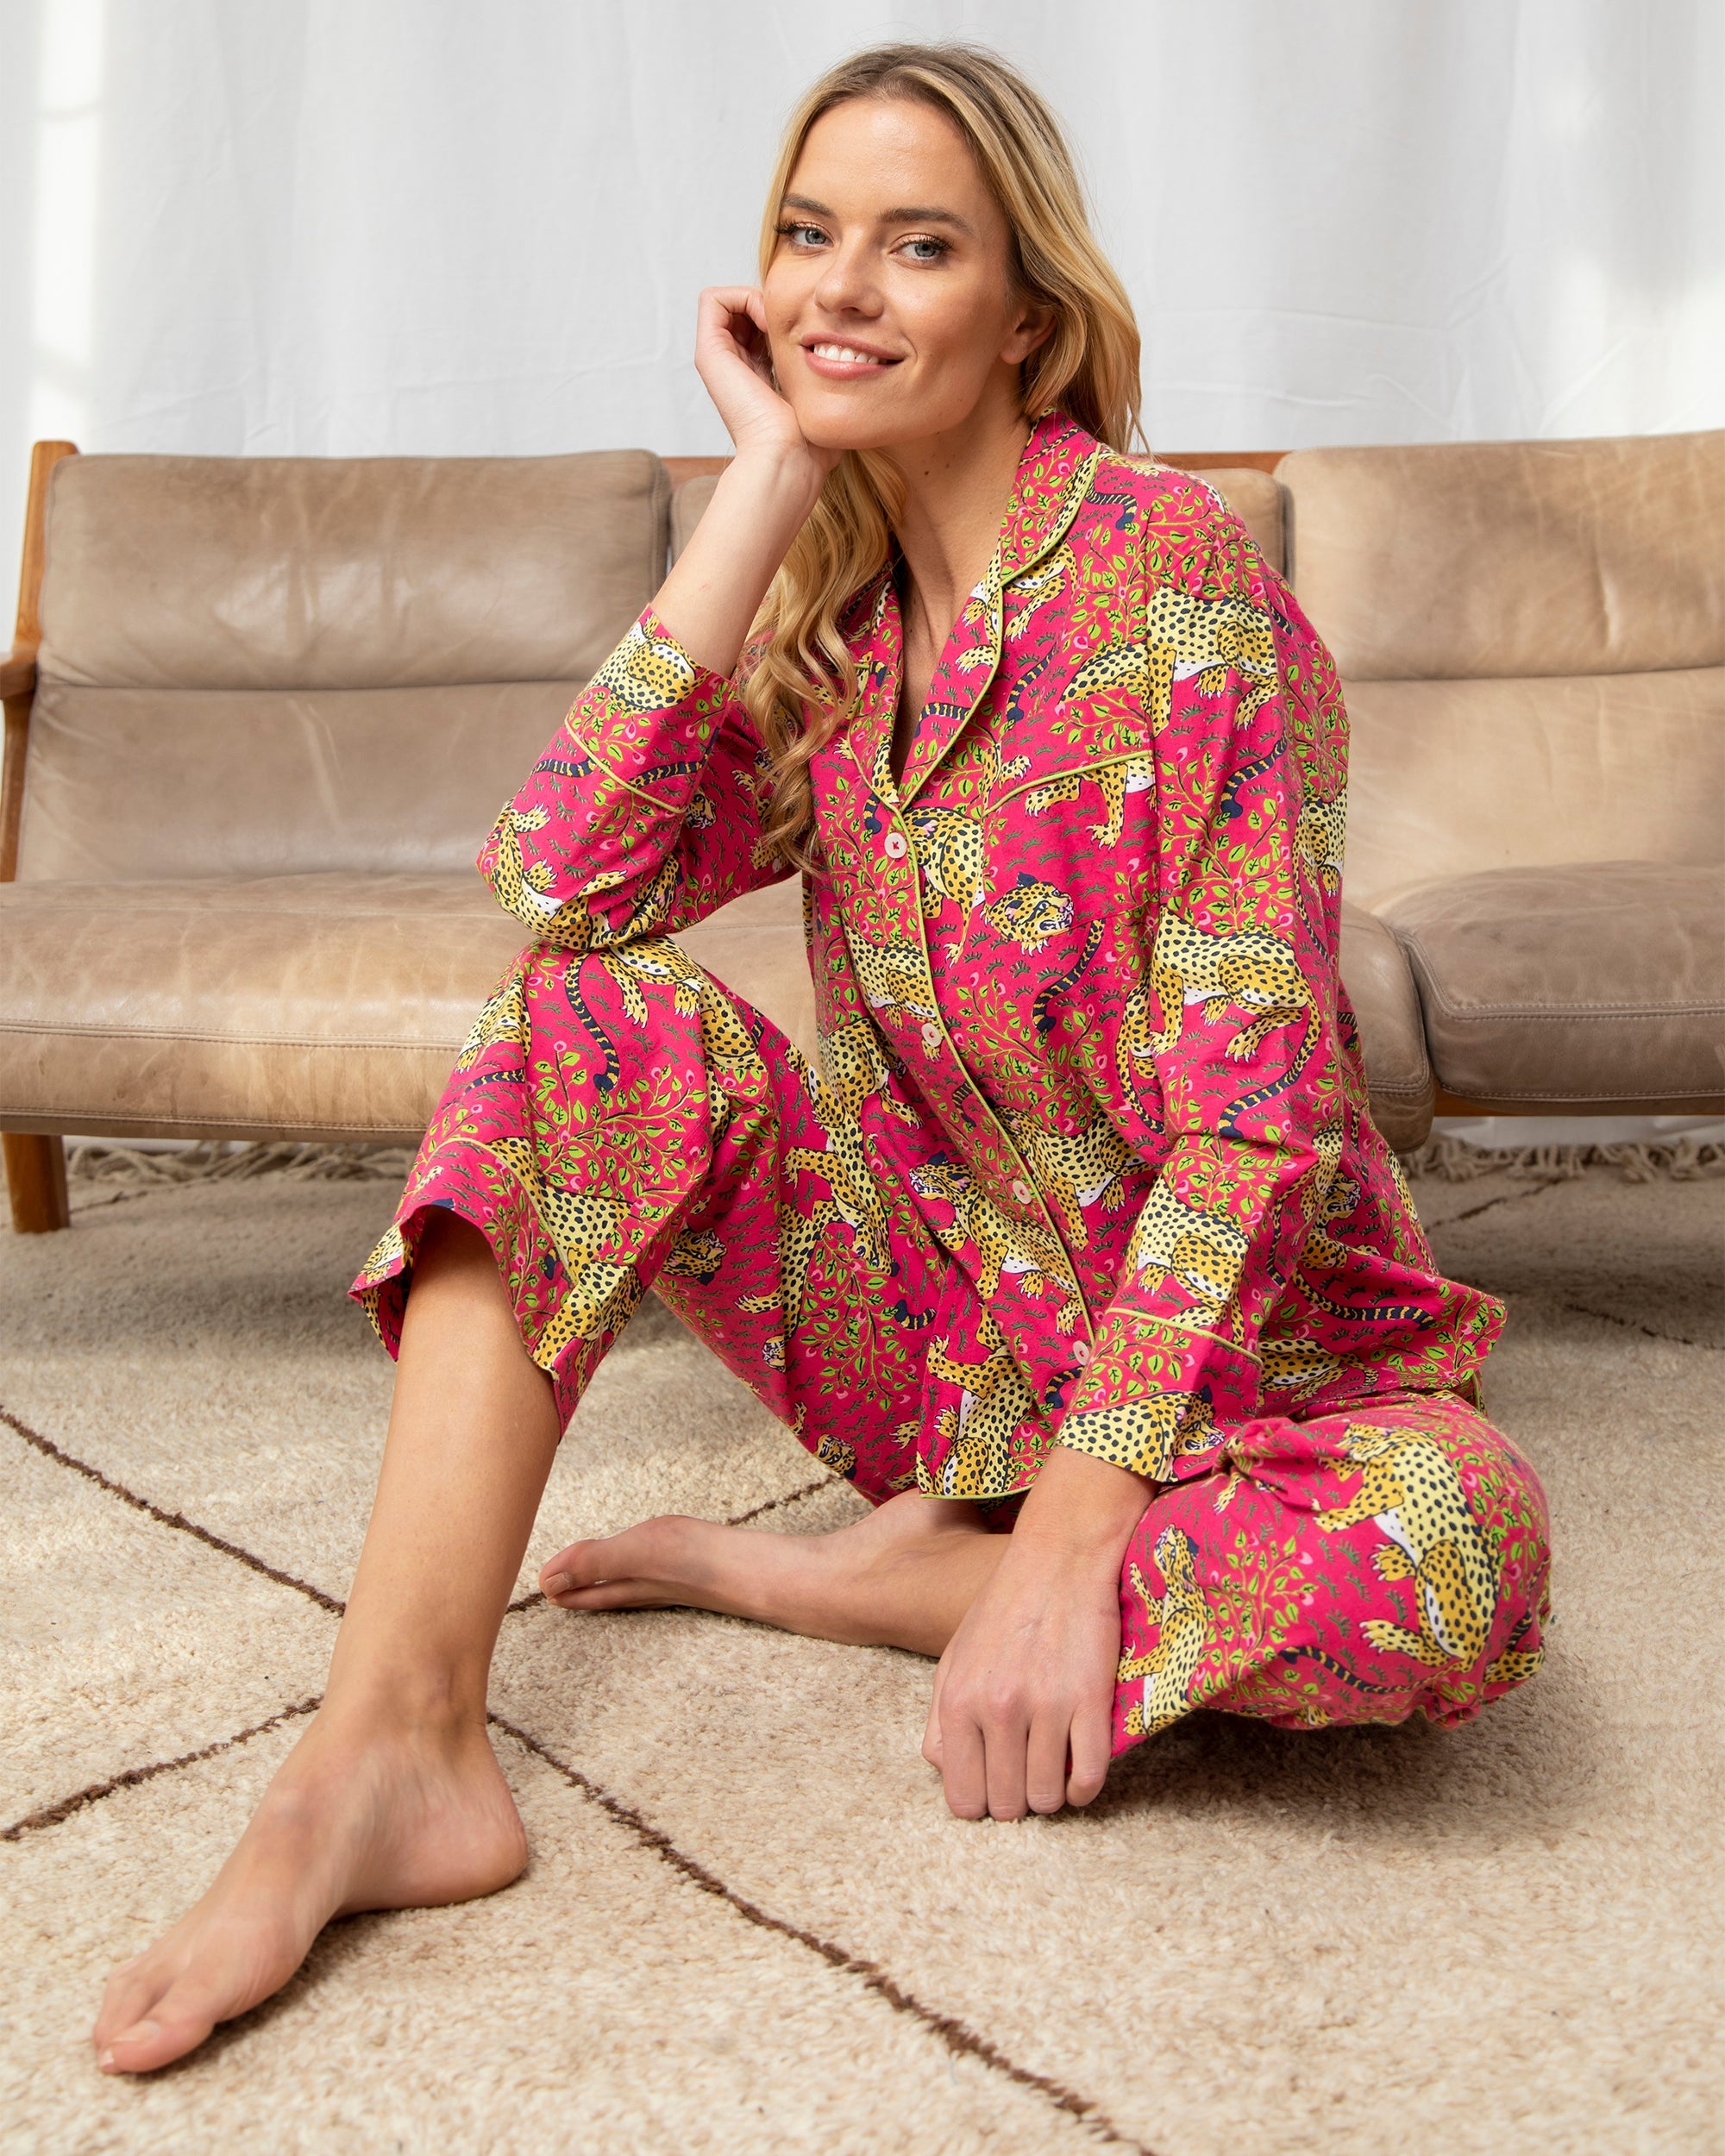 Pajama Set Women Peach-print Lovely Spring Sleepwear Lounge Korean